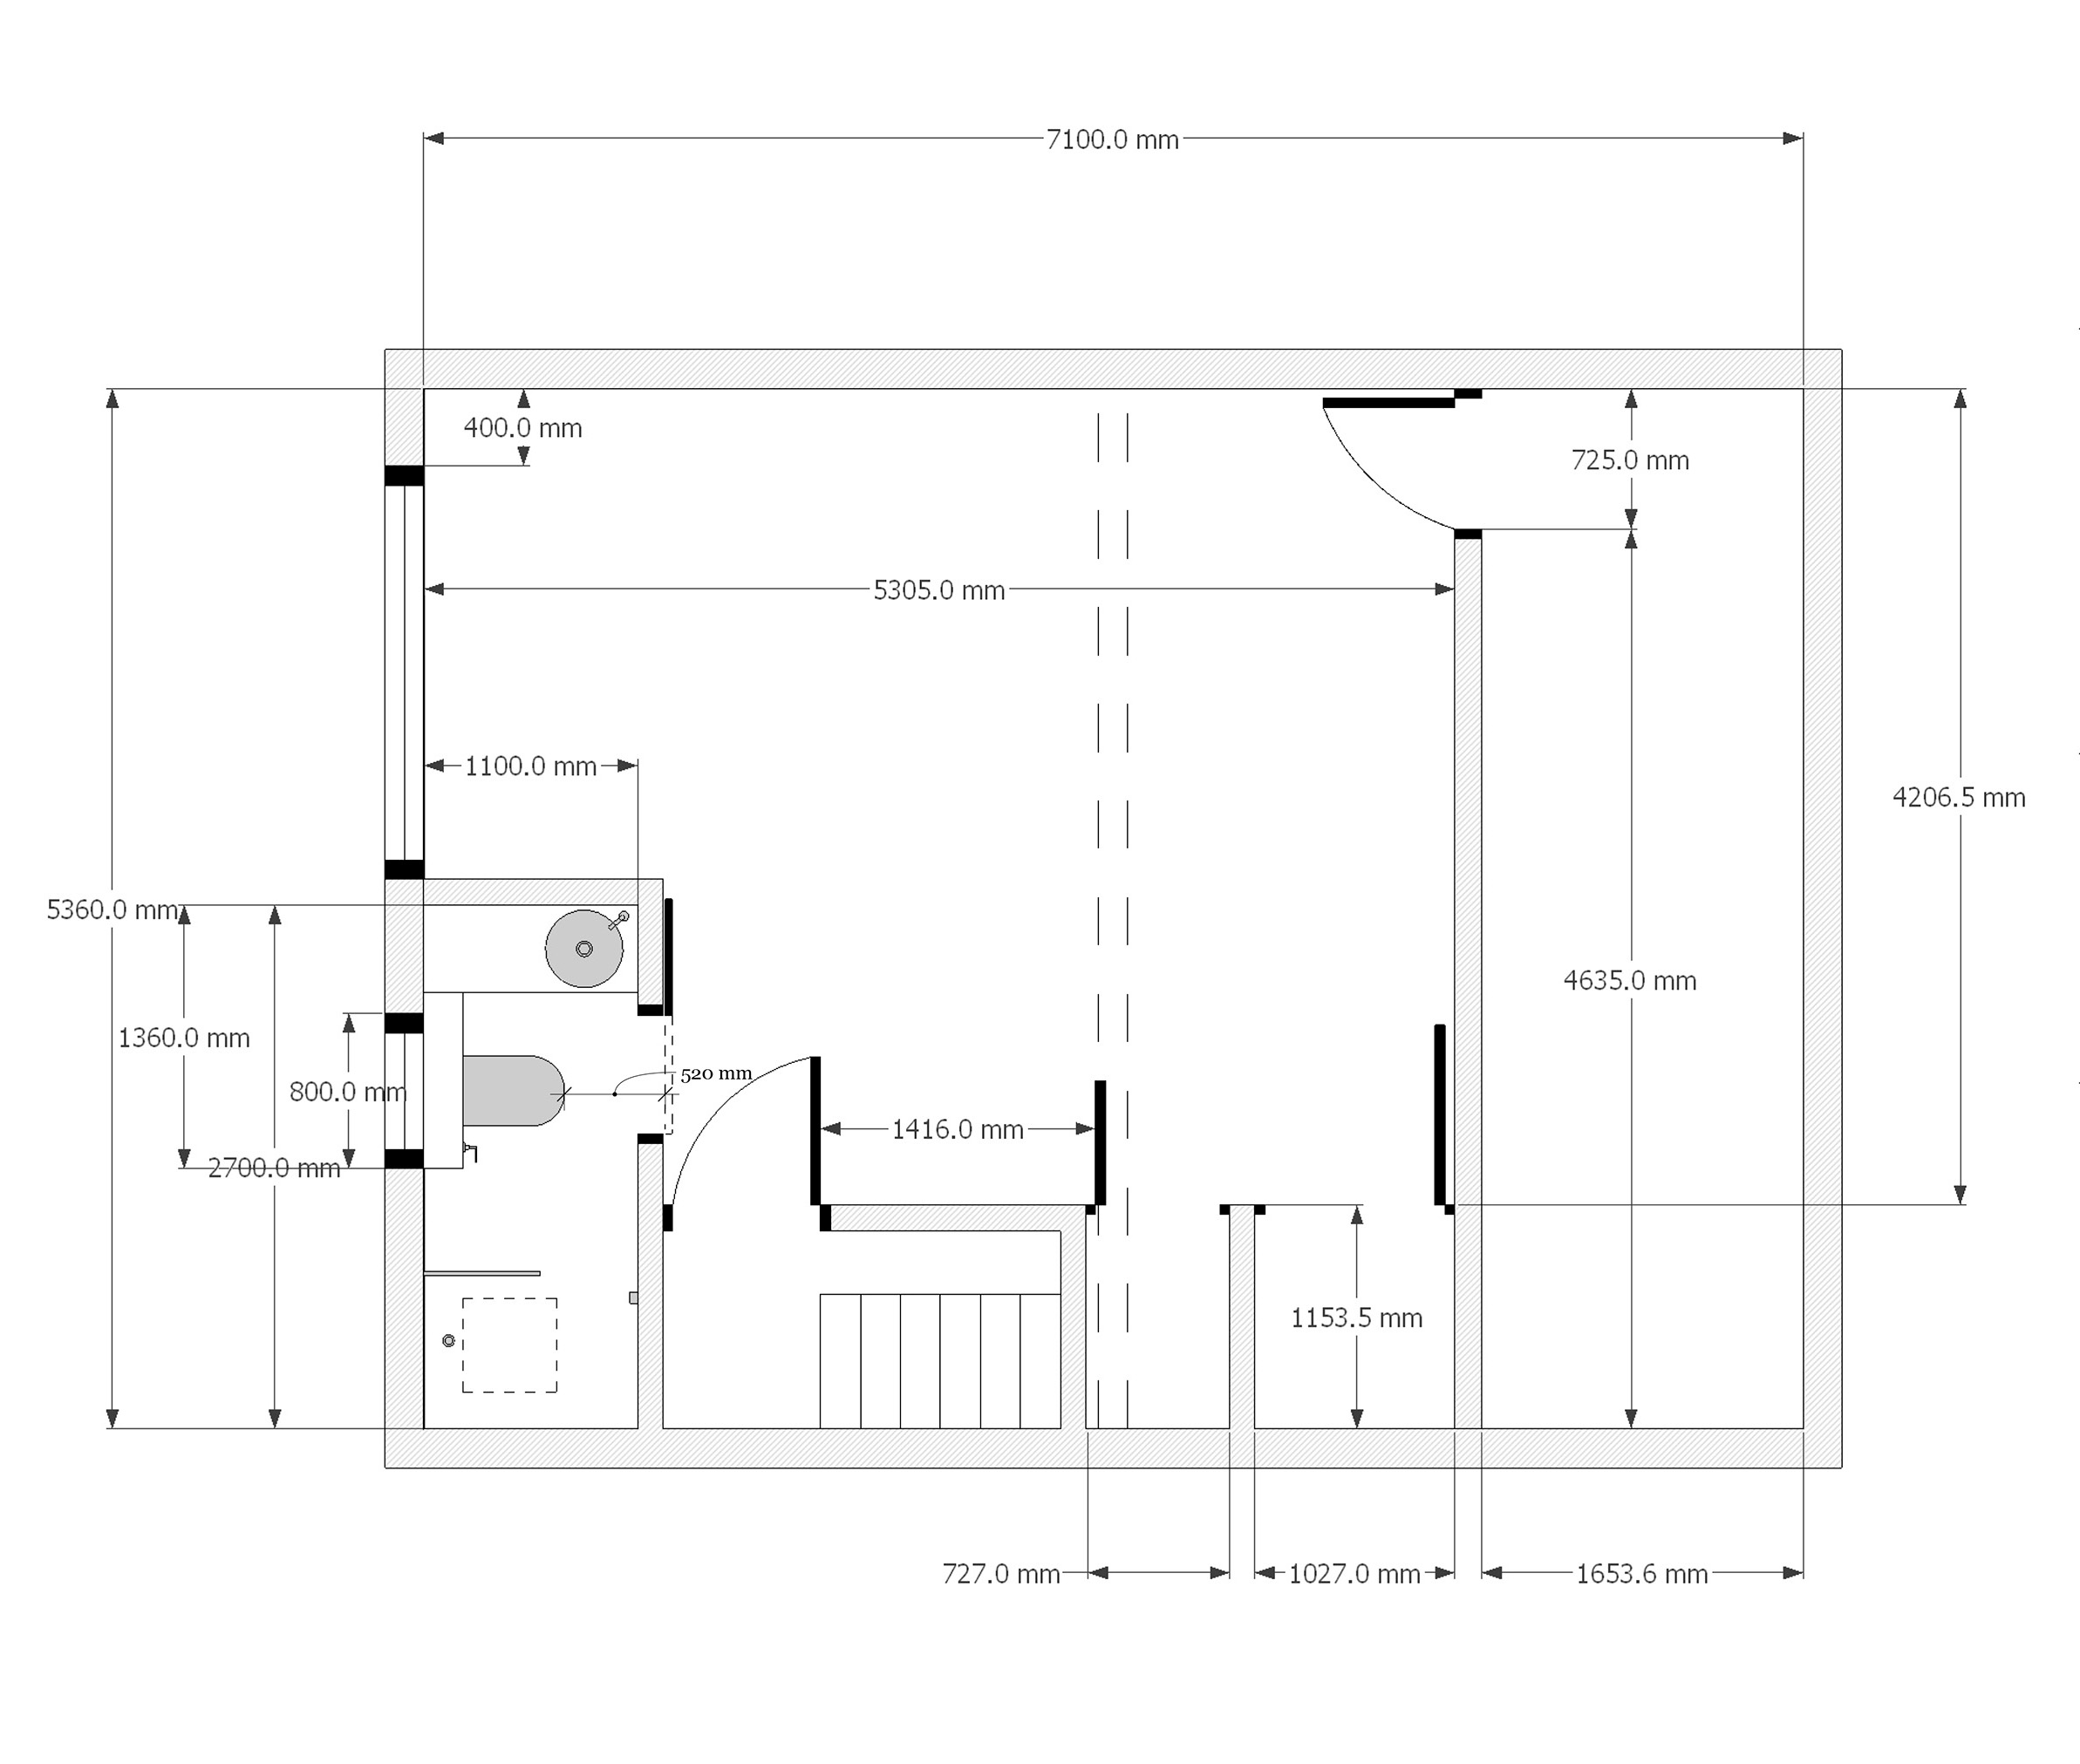 My floorplans for the loft including a larger bathroom.